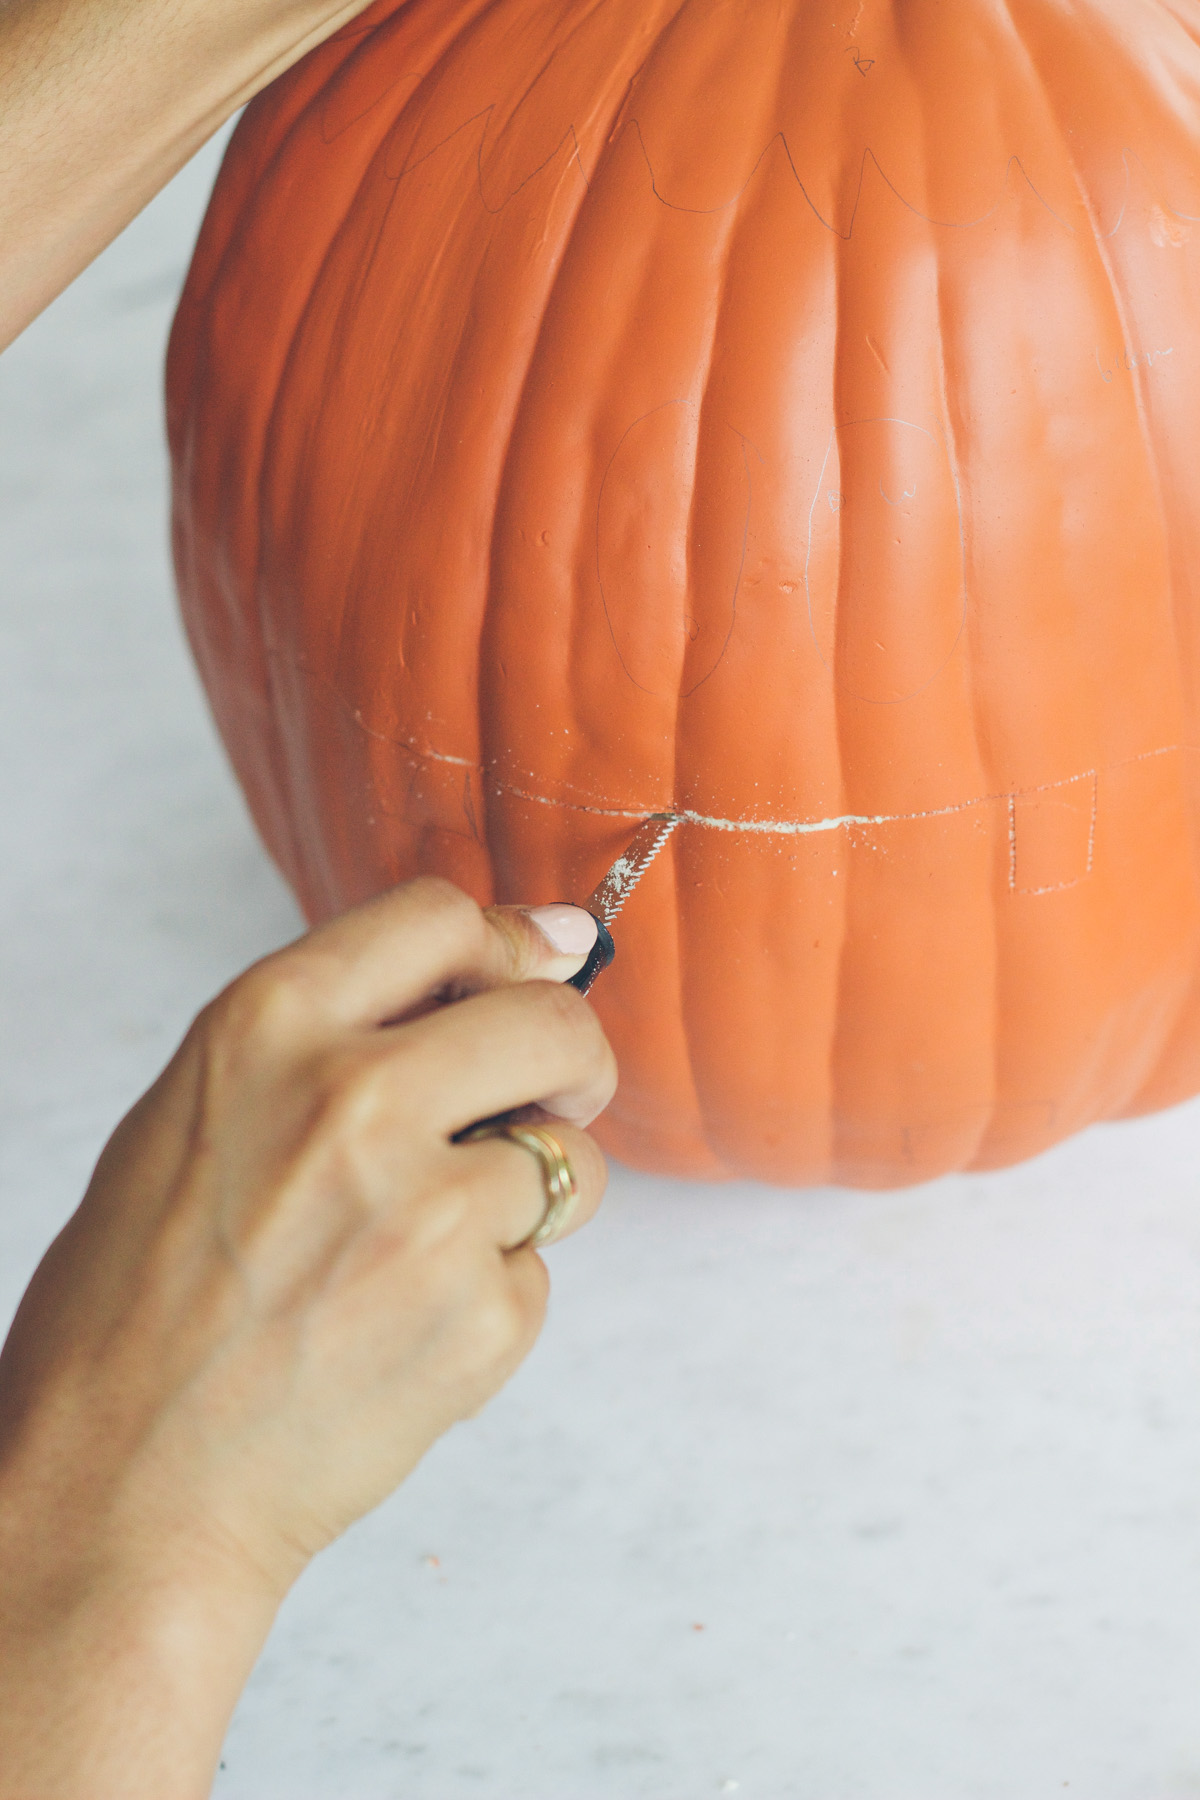 pumpkin carving tutorial